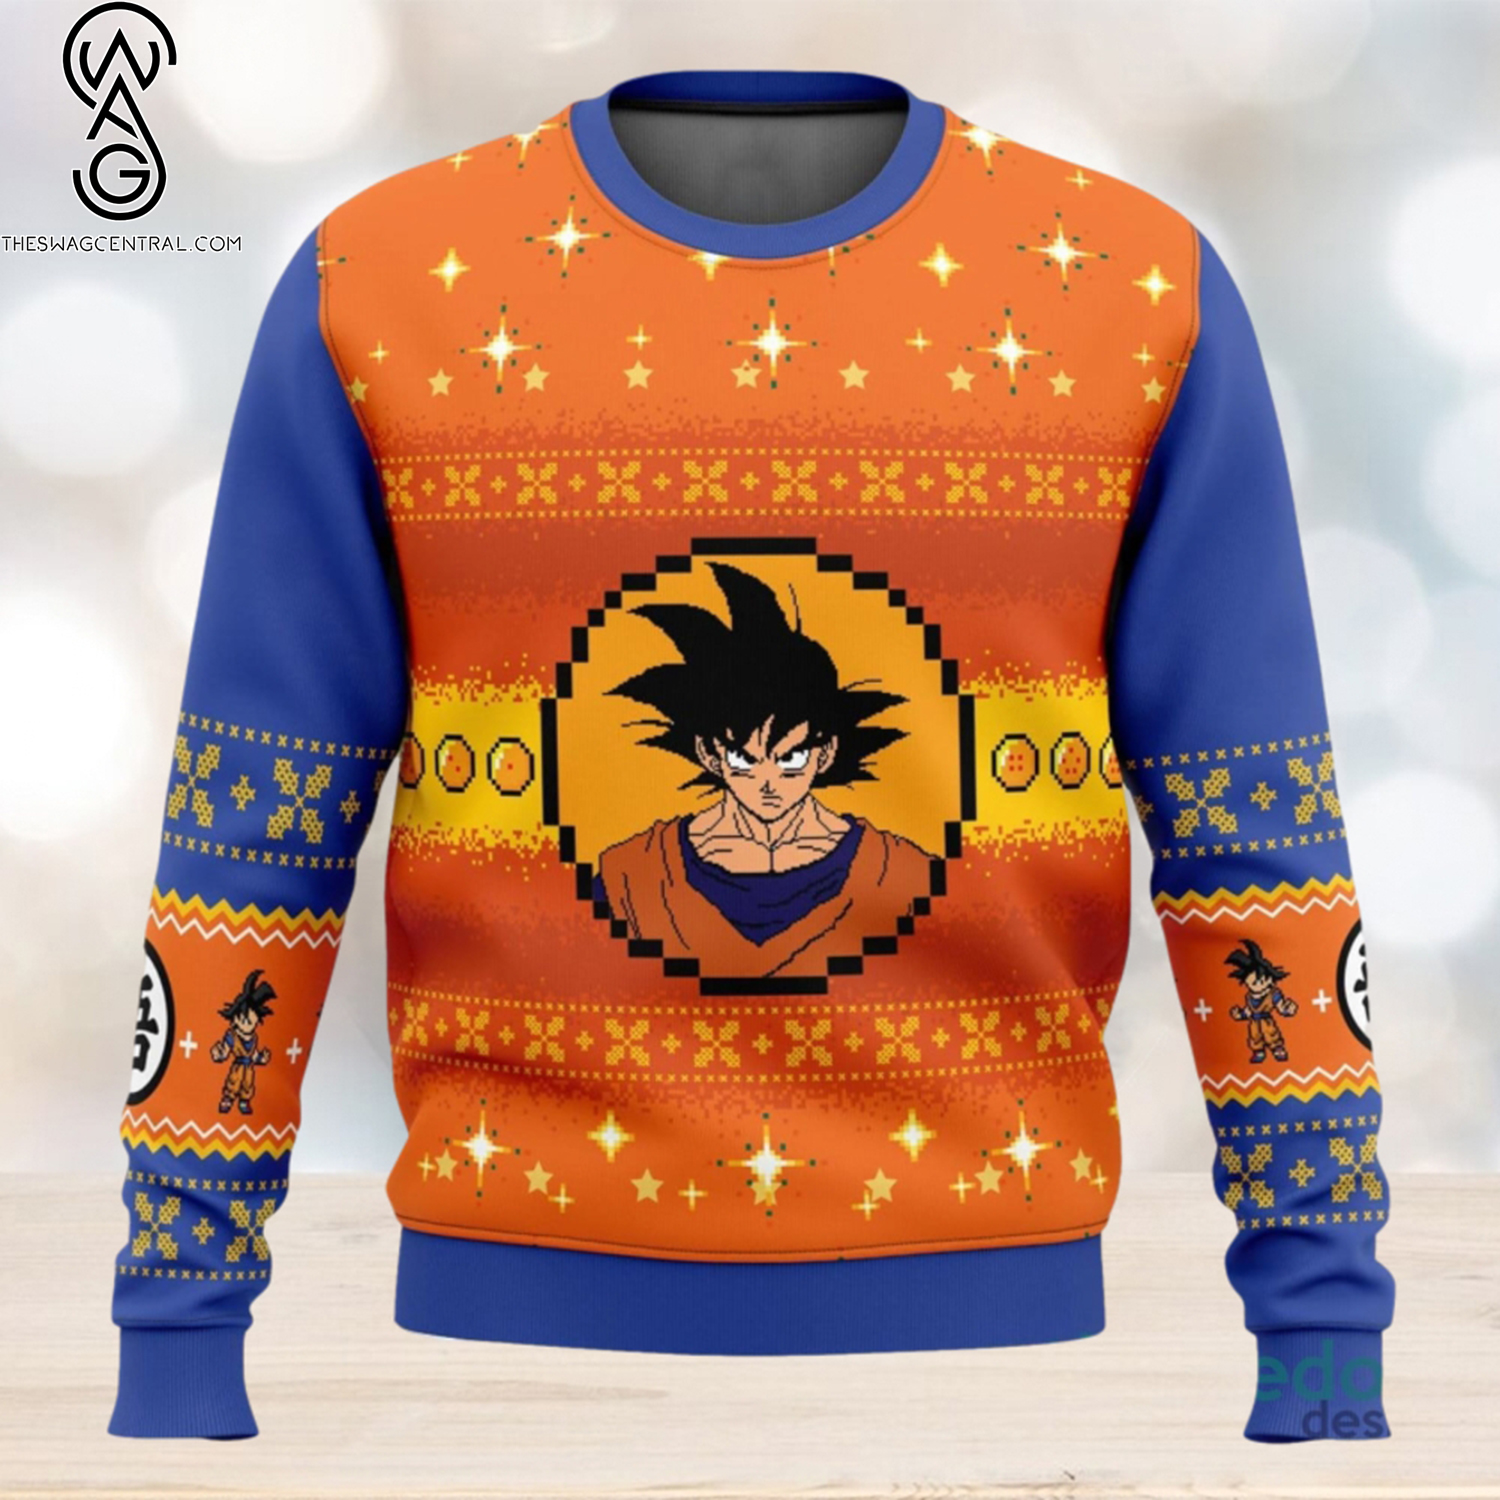 Unleash Your Inner Saiyan Spirit The Dragon Ball Z Sweater - The Ultimate Christmas Gift!